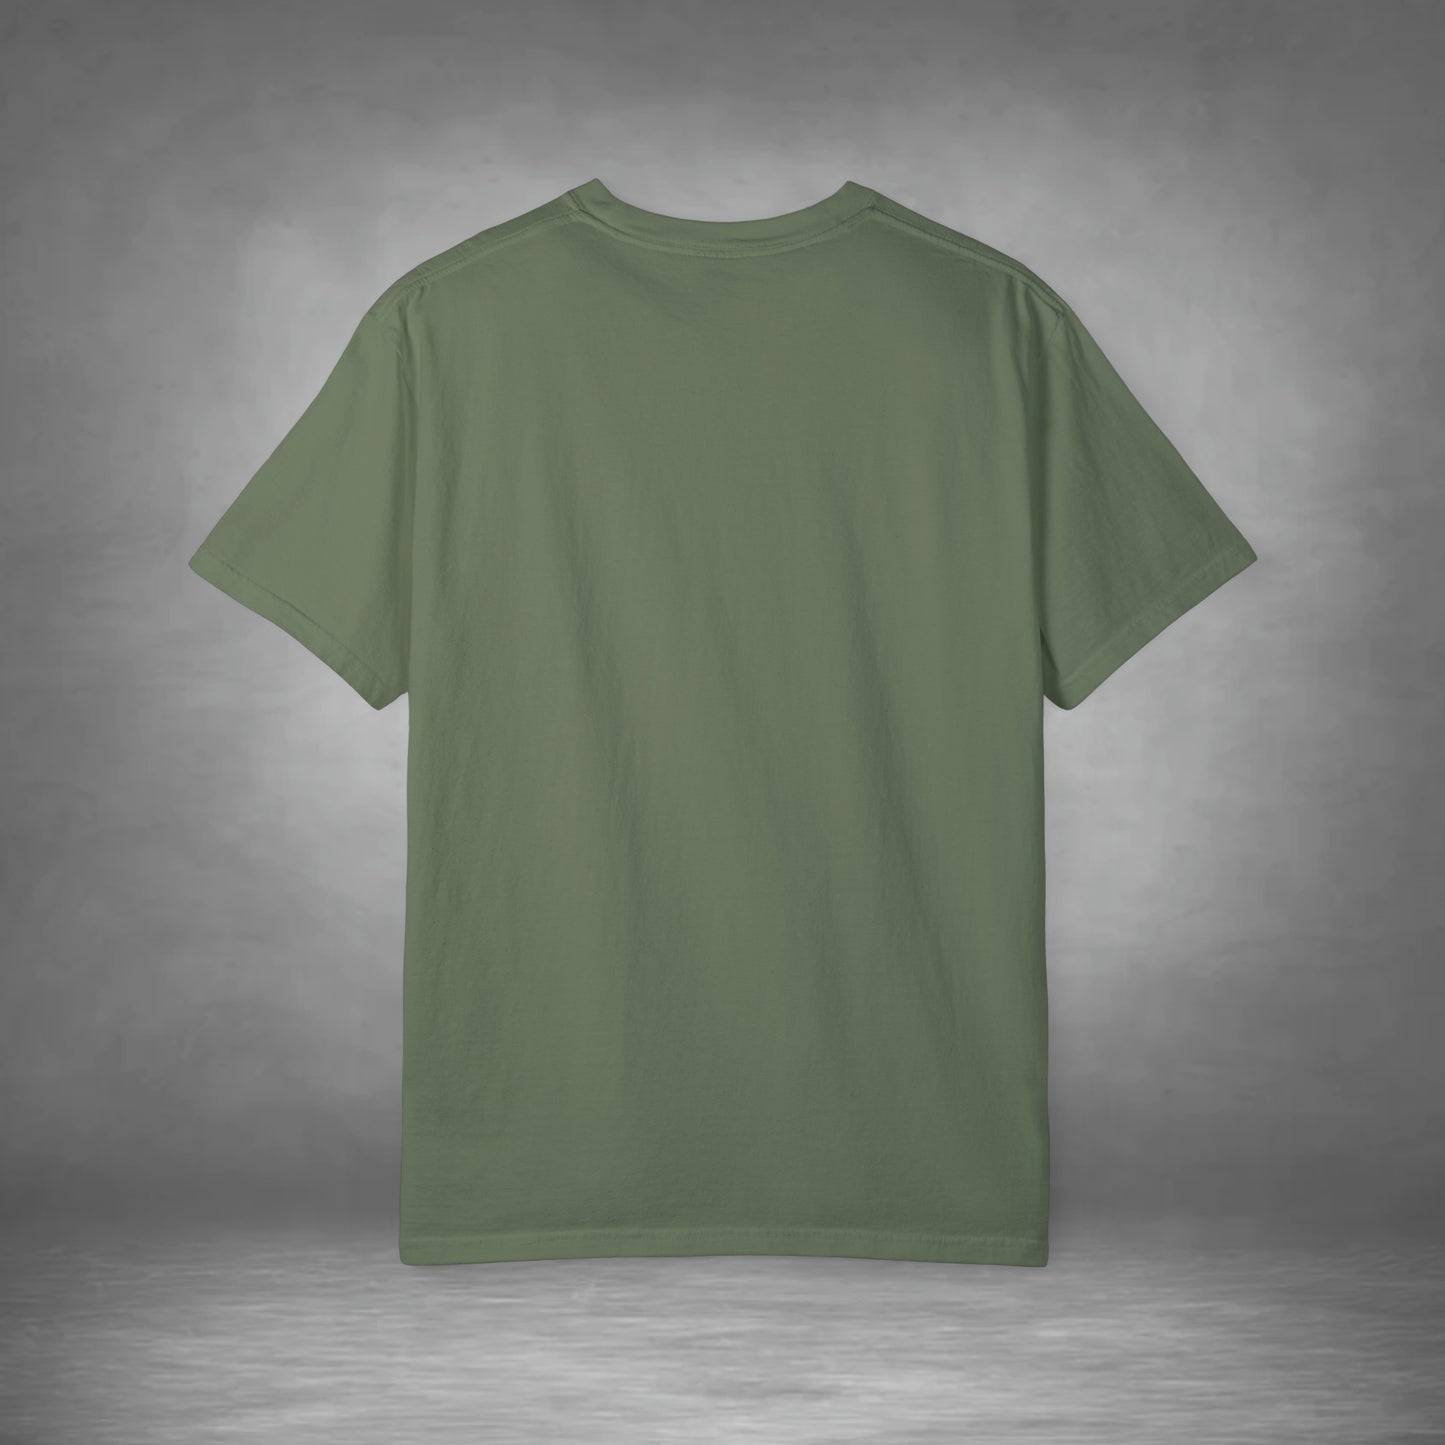 Spliff Tees T-shirt